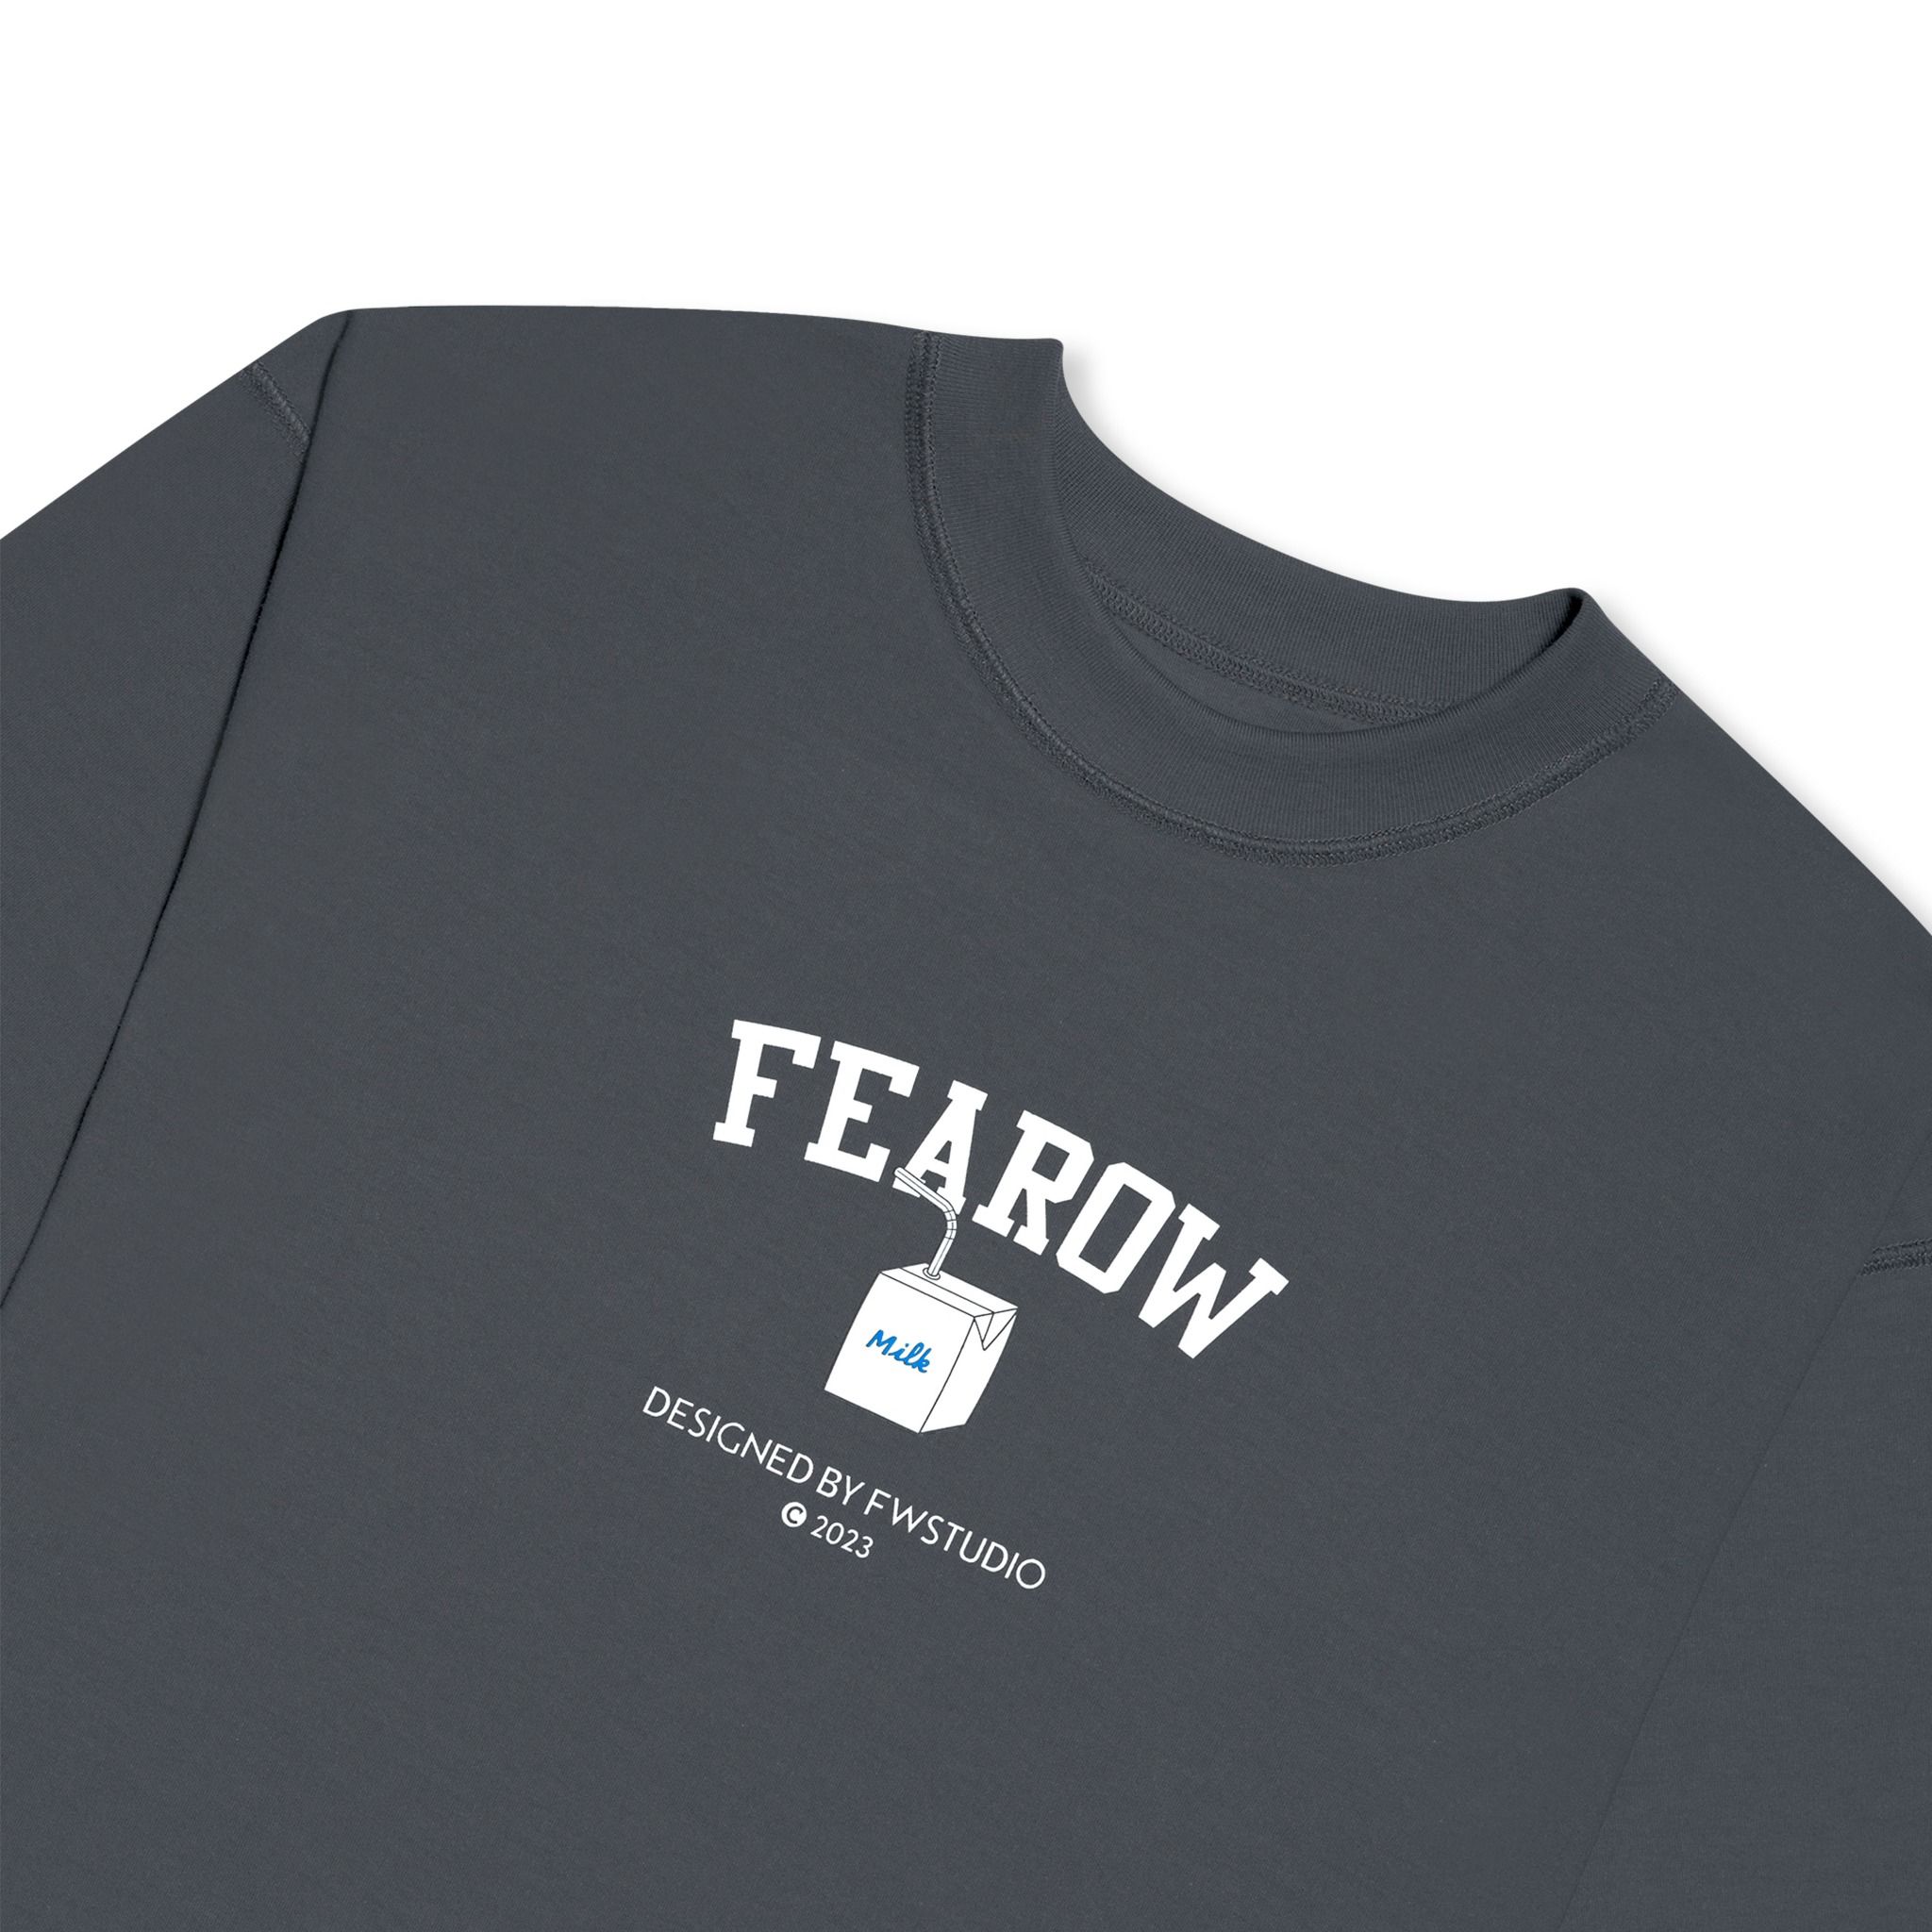  Fearow Double Tee Collection - Milk Bottle / Gray Pinstripe 